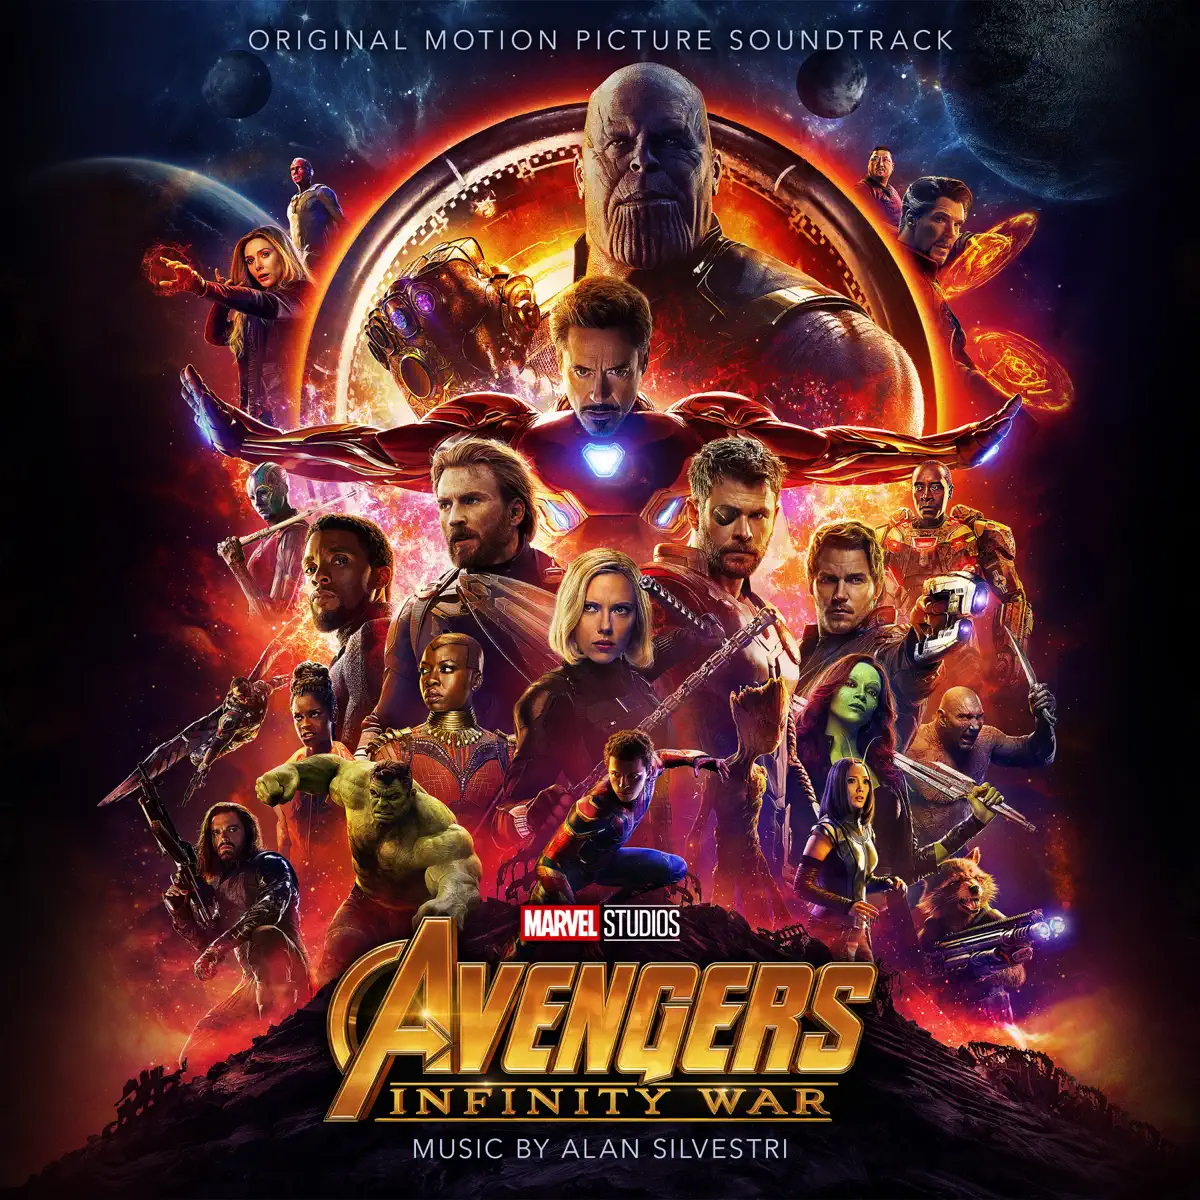 Alan Silvestri - 復仇者聯盟3: 無限戰爭 Avengers: Infinity War (Original Motion Picture Soundtrack) [Deluxe Edition] (2018) [iTunes Plus AAC M4A]-新房子